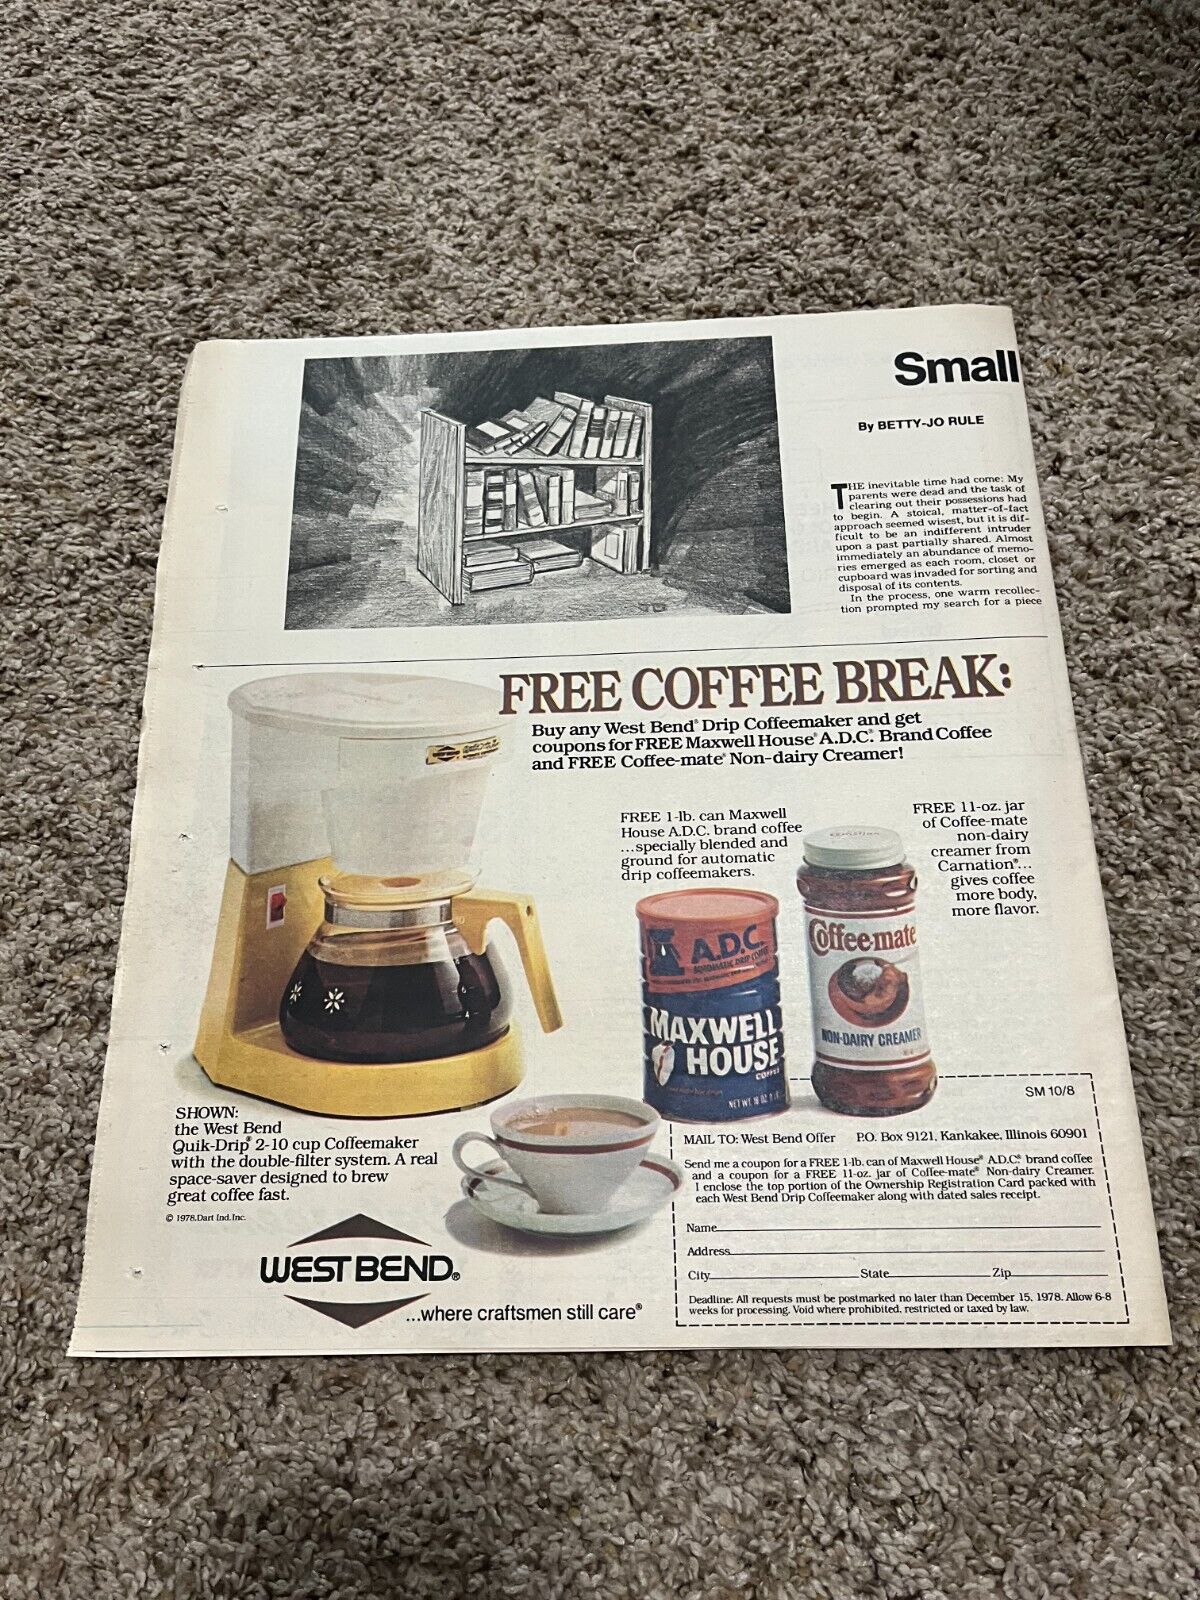 1978 West Bend Maxwell House Coffee-mate Newspaper Print Ad